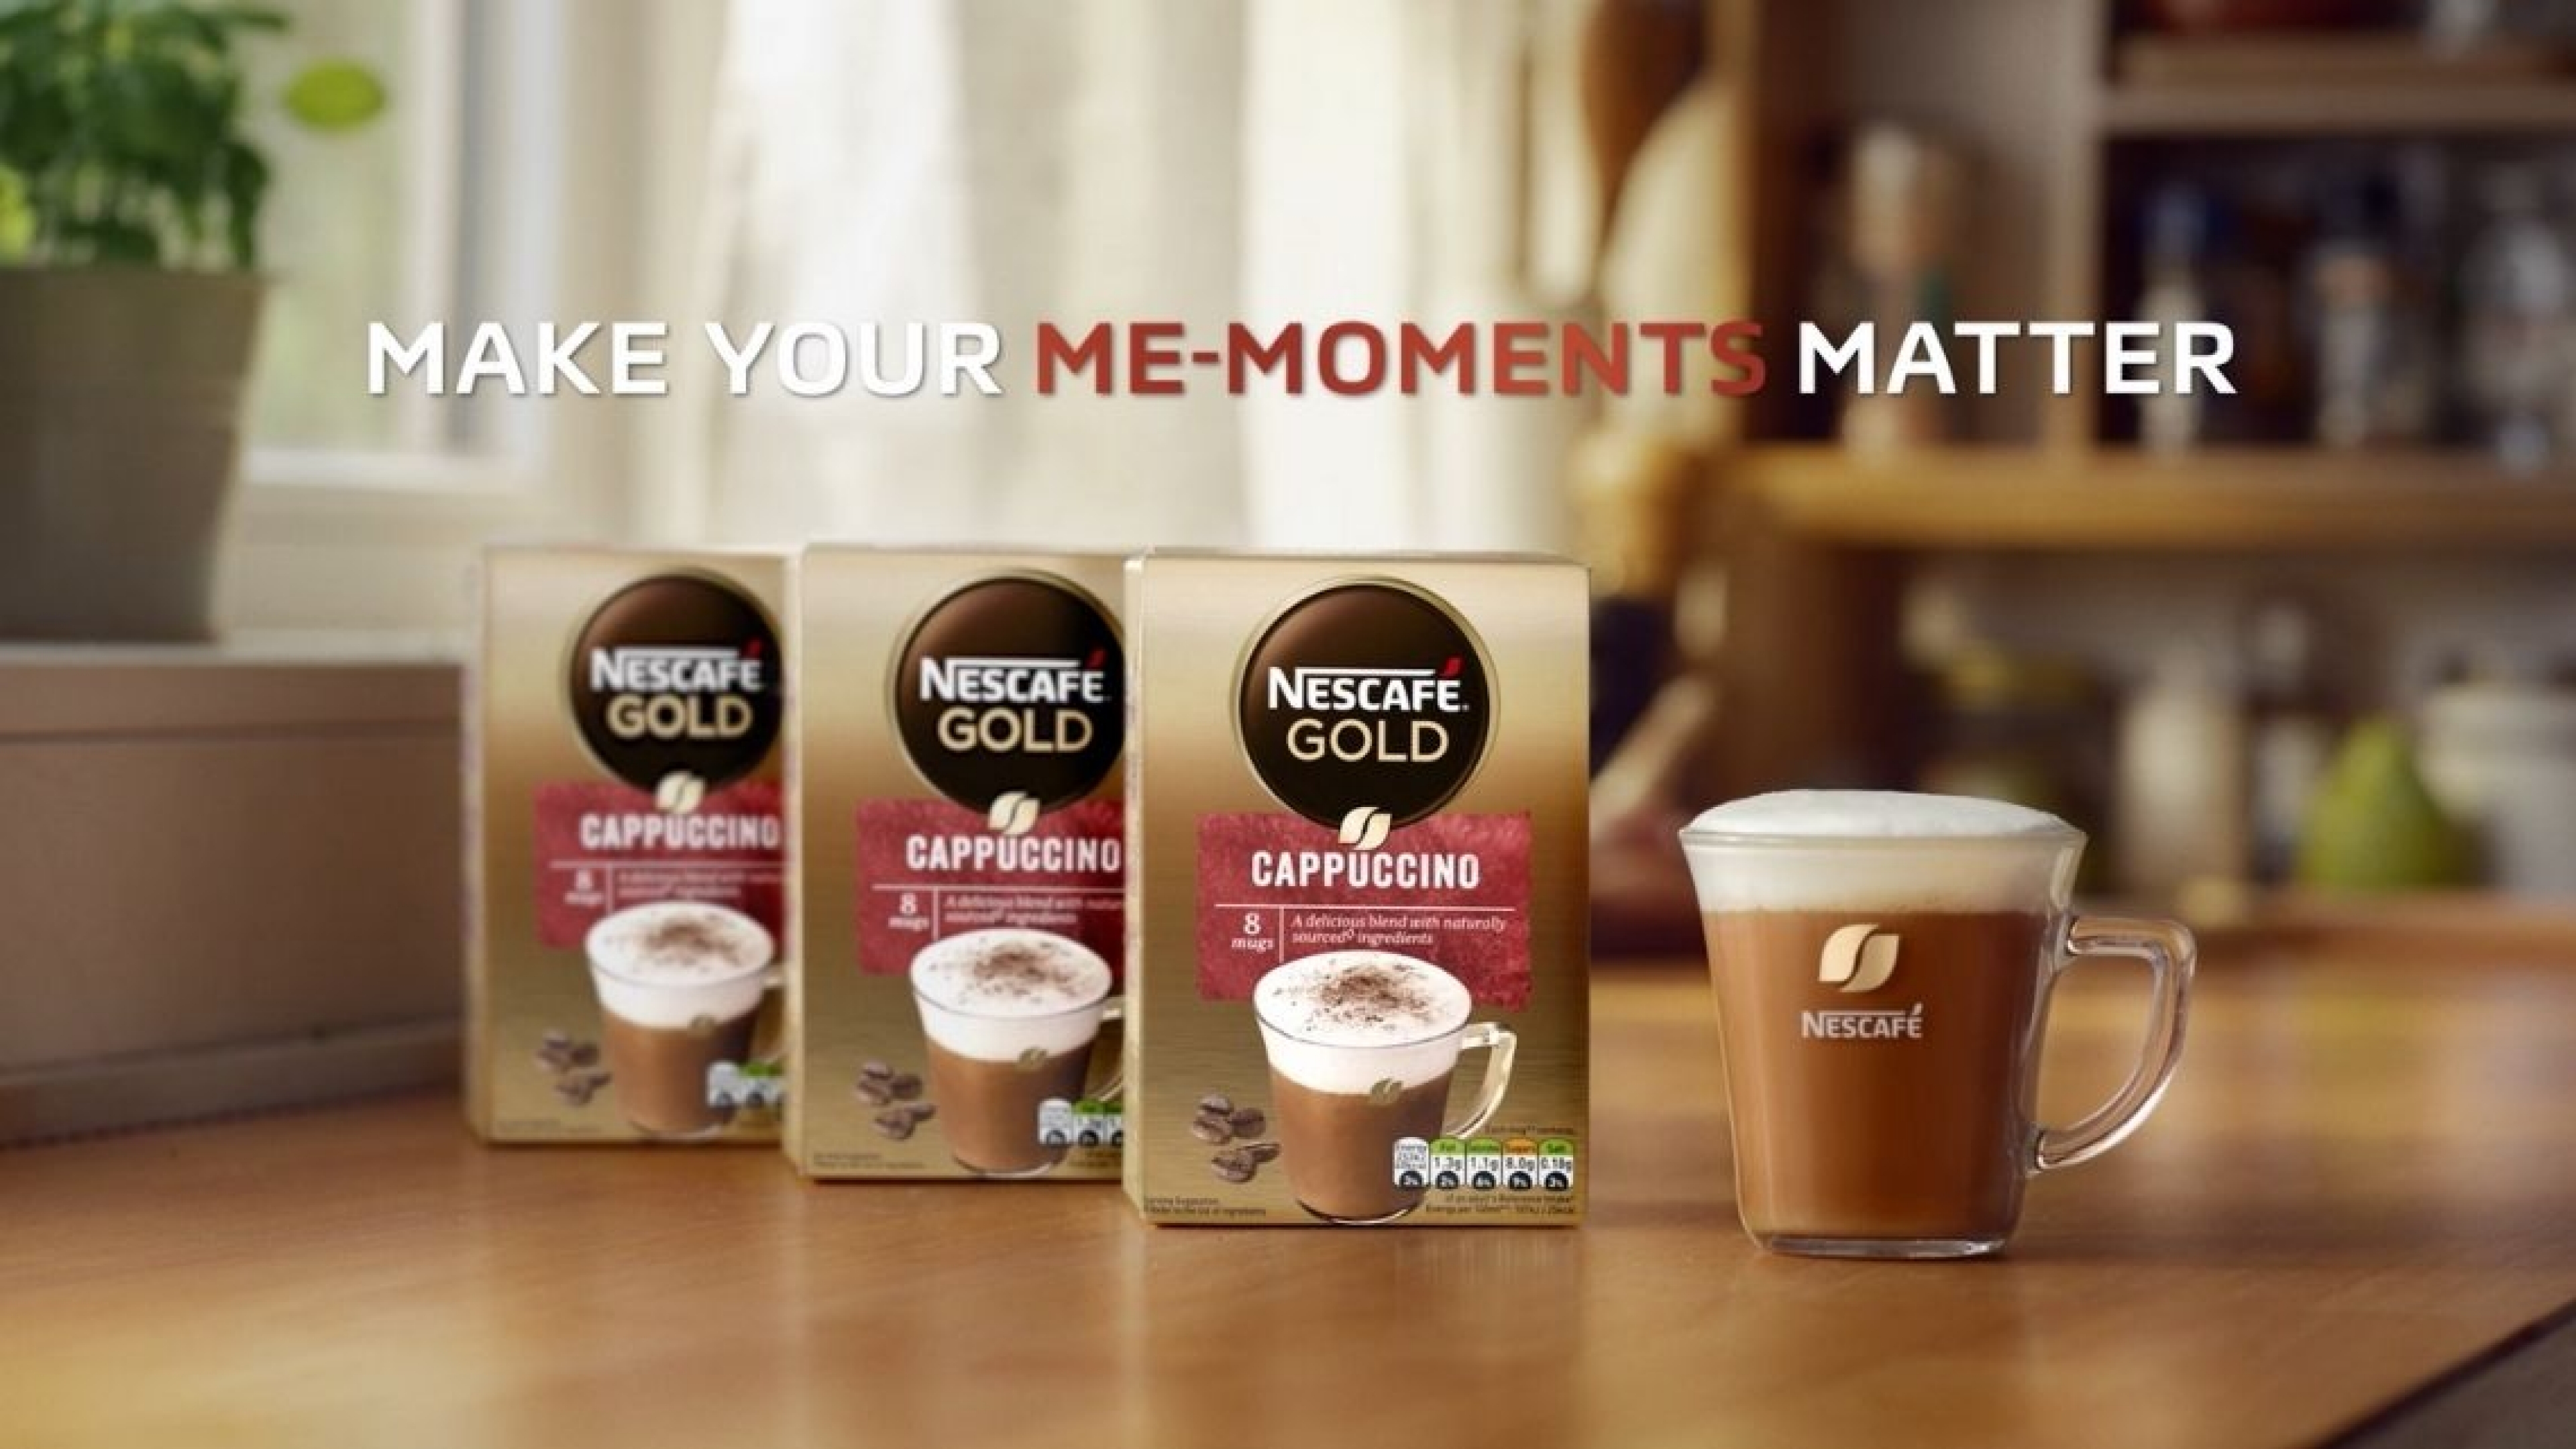 Nescafé Gold Cappuccino Make Your Me-Moment Matter